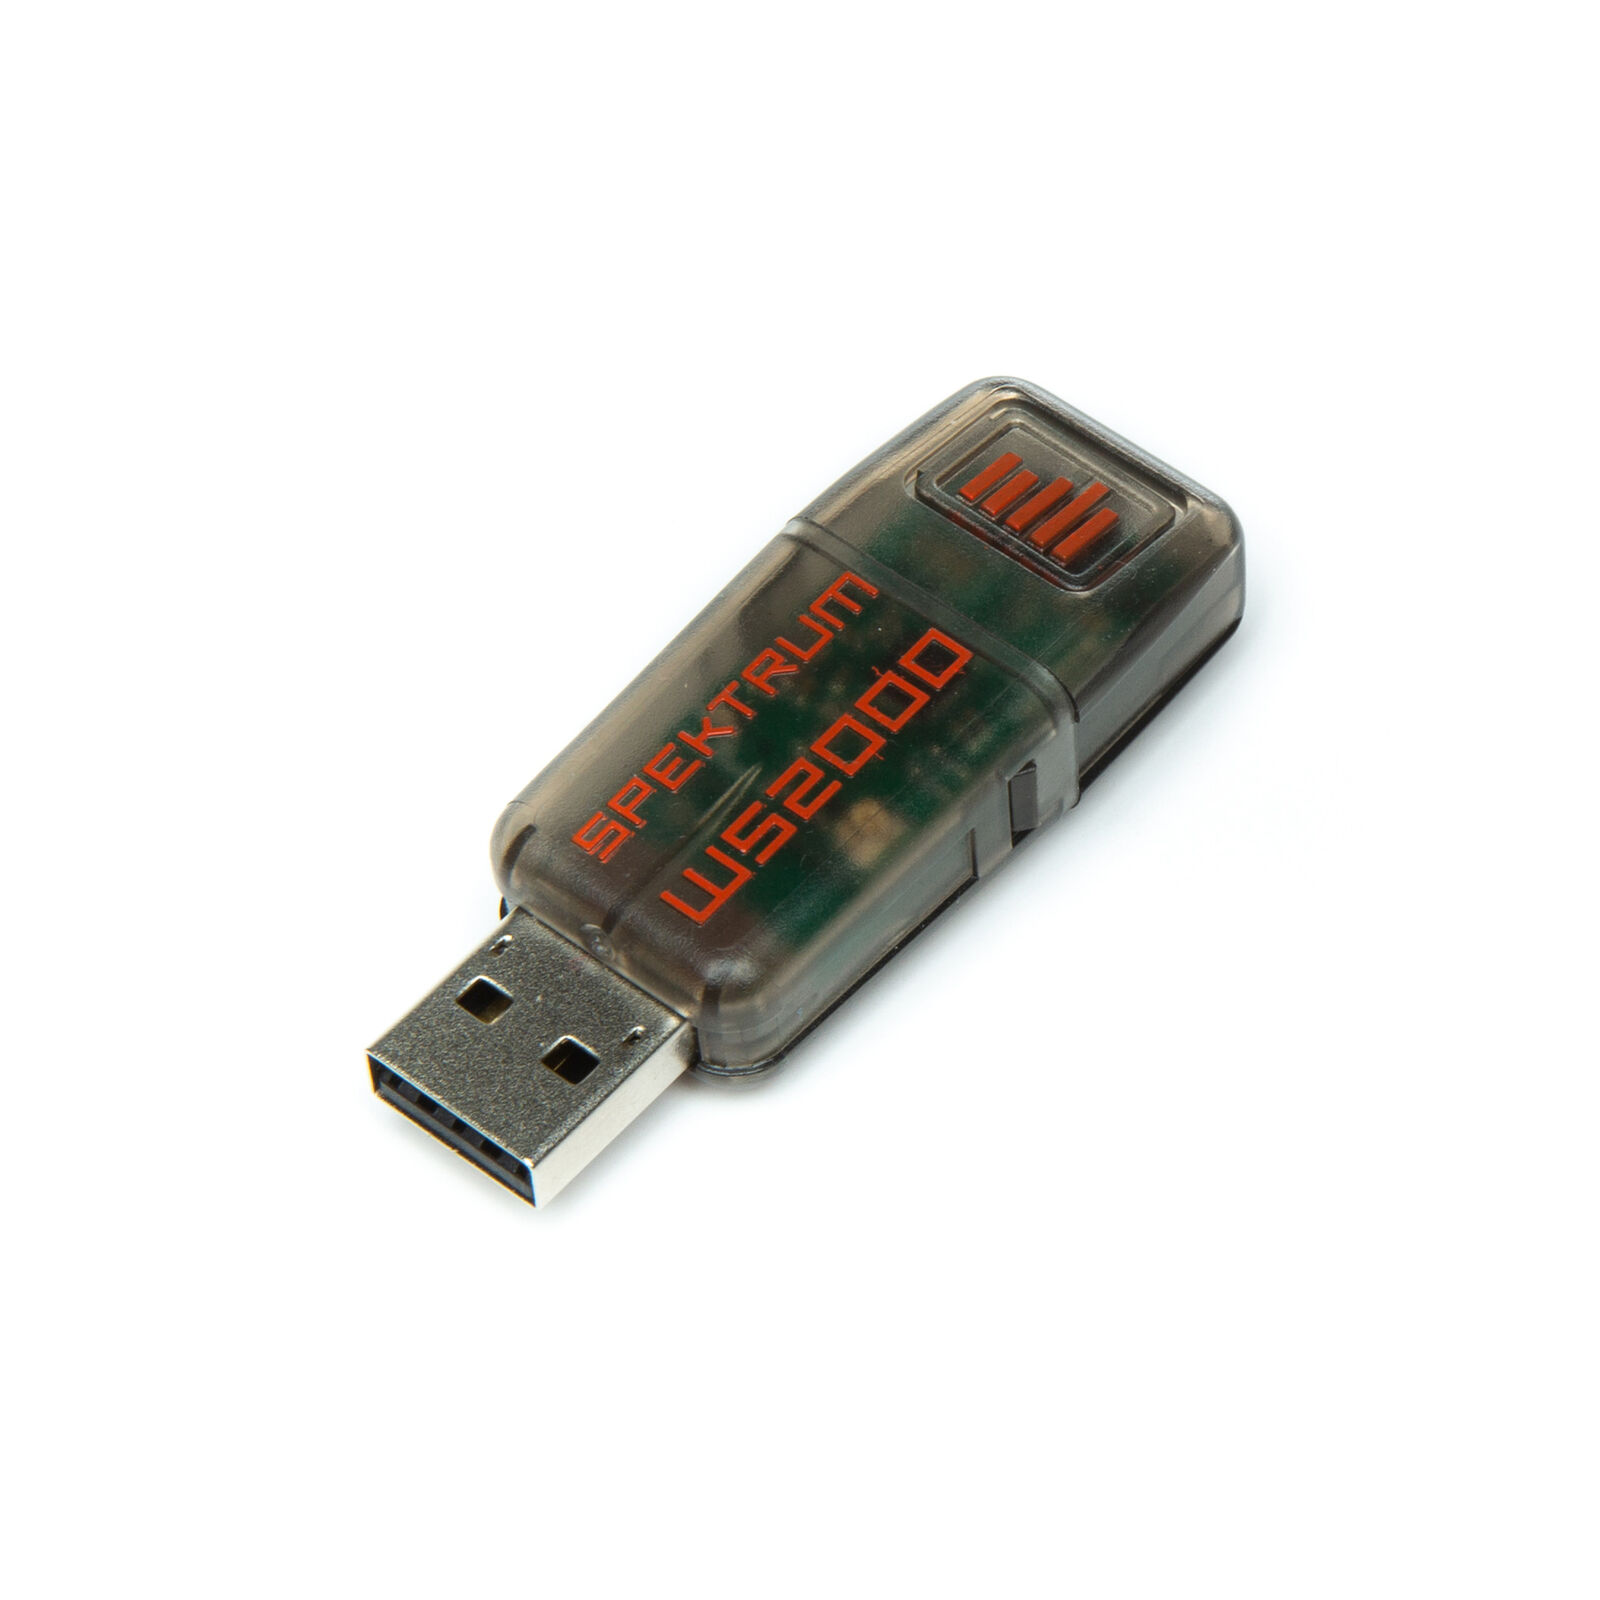 Wireless Simulator USB Dongle (SPMWS2000)